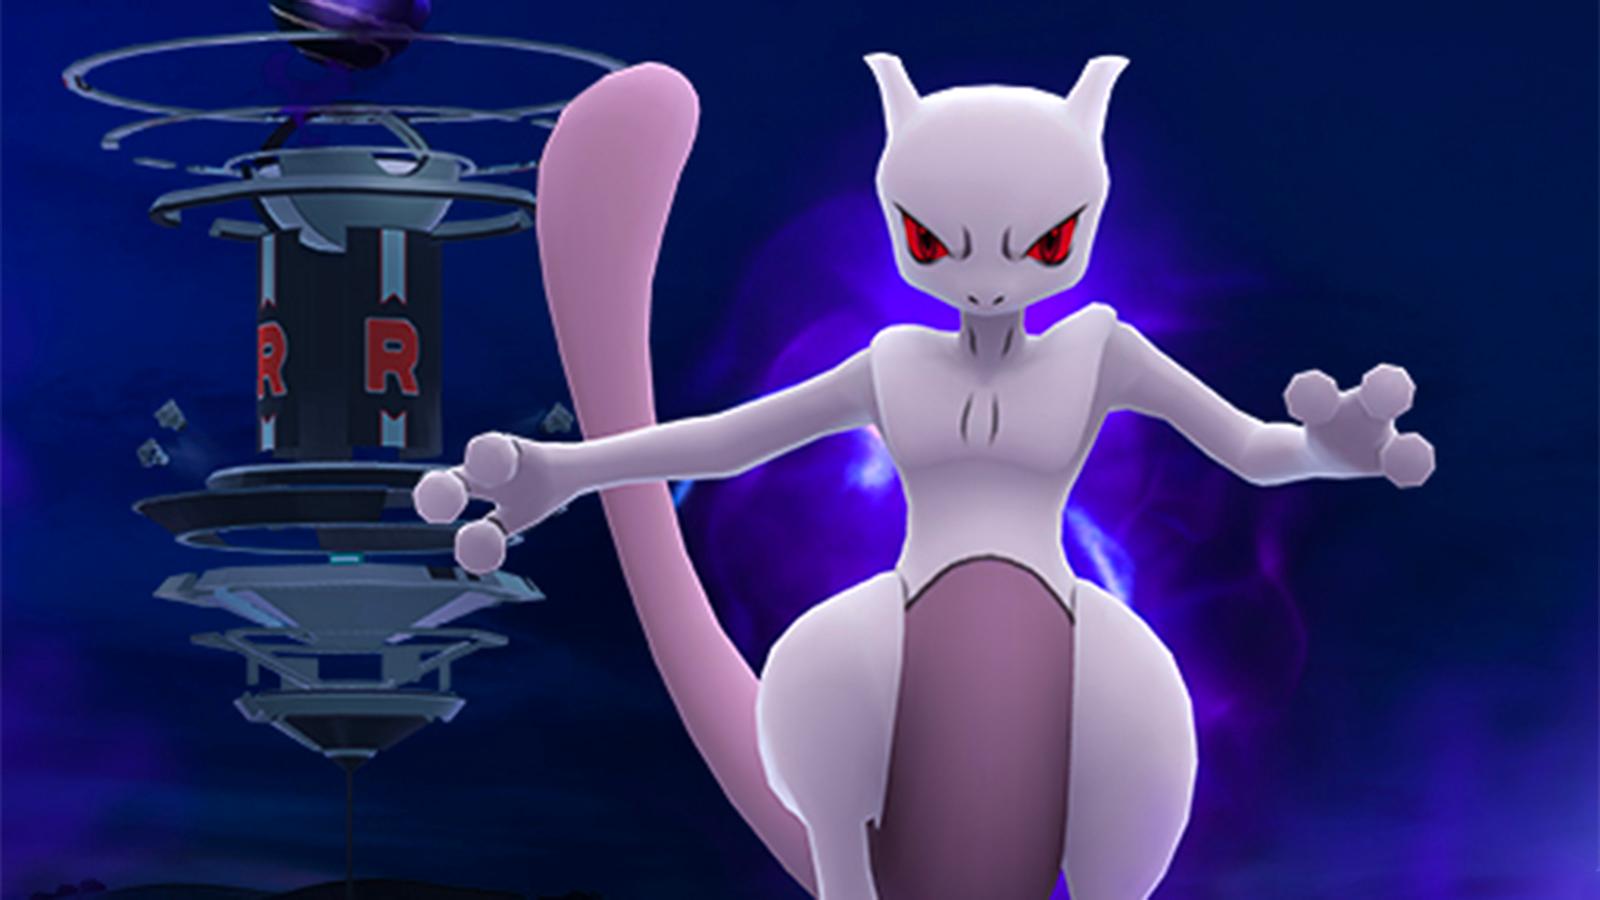 New Eggs & Shadow Mewtwo Coming To Pokémon GO